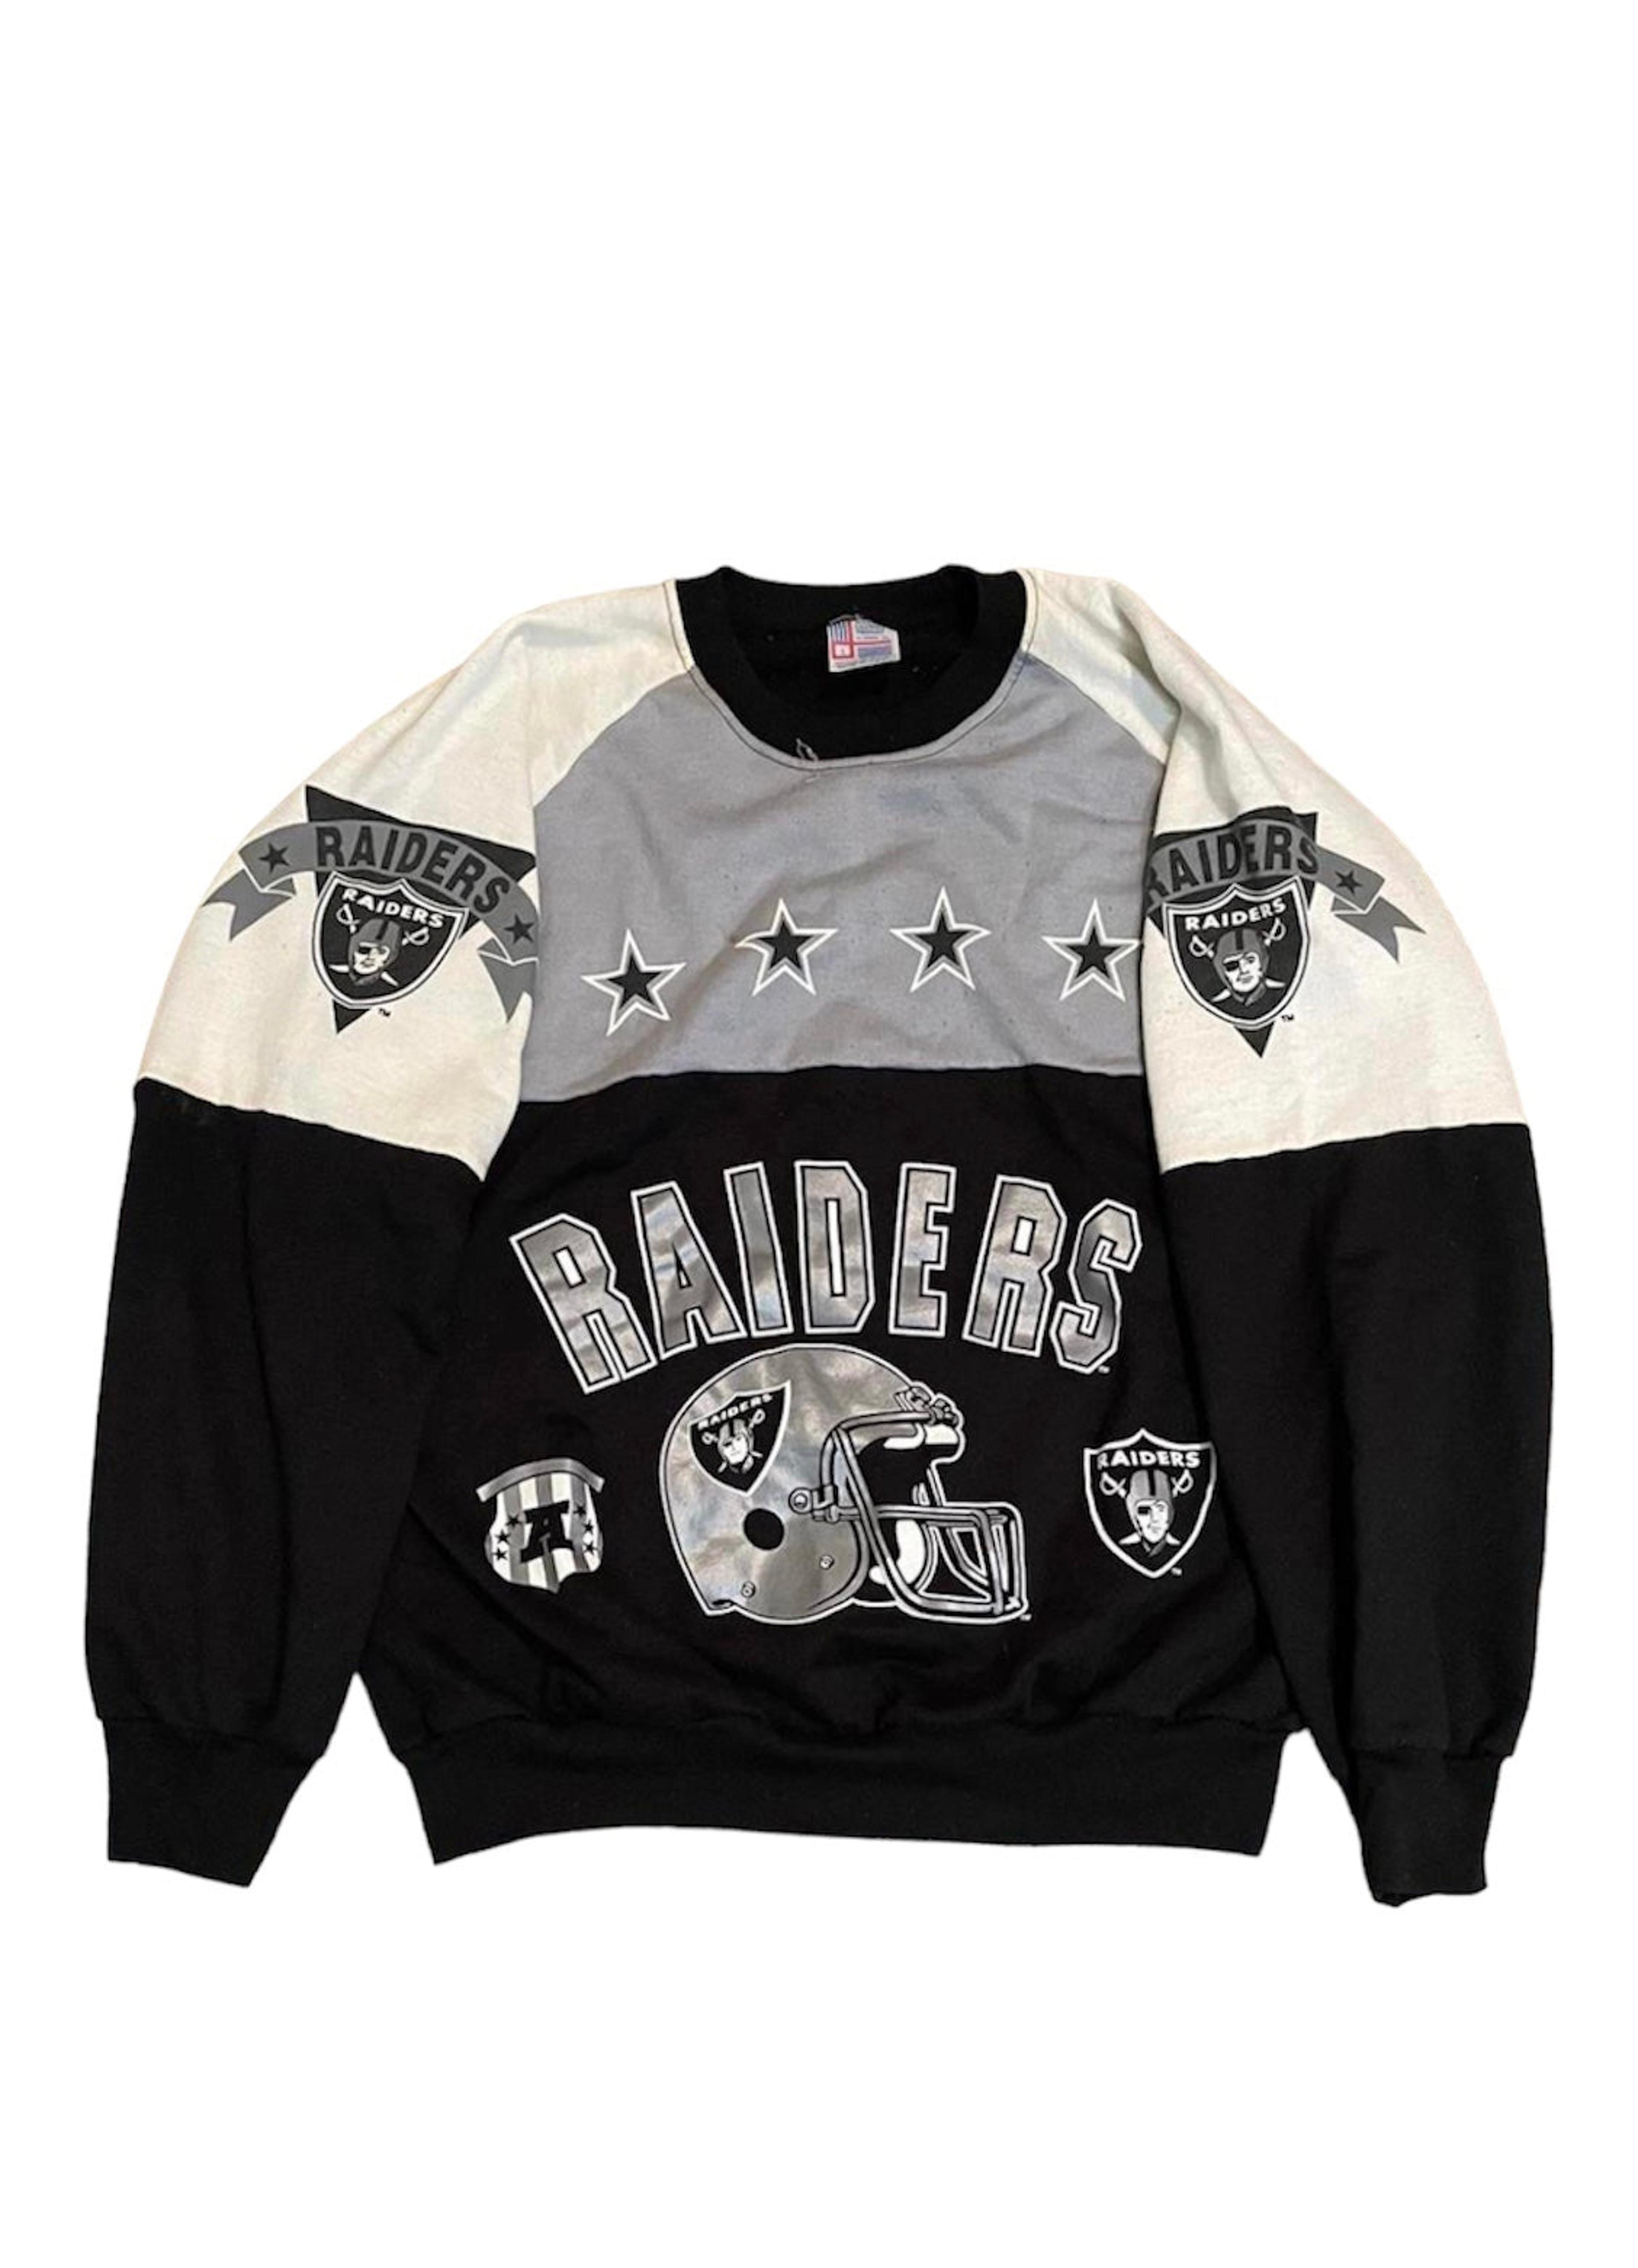 Oakland Raiders 80’s sweatshirt